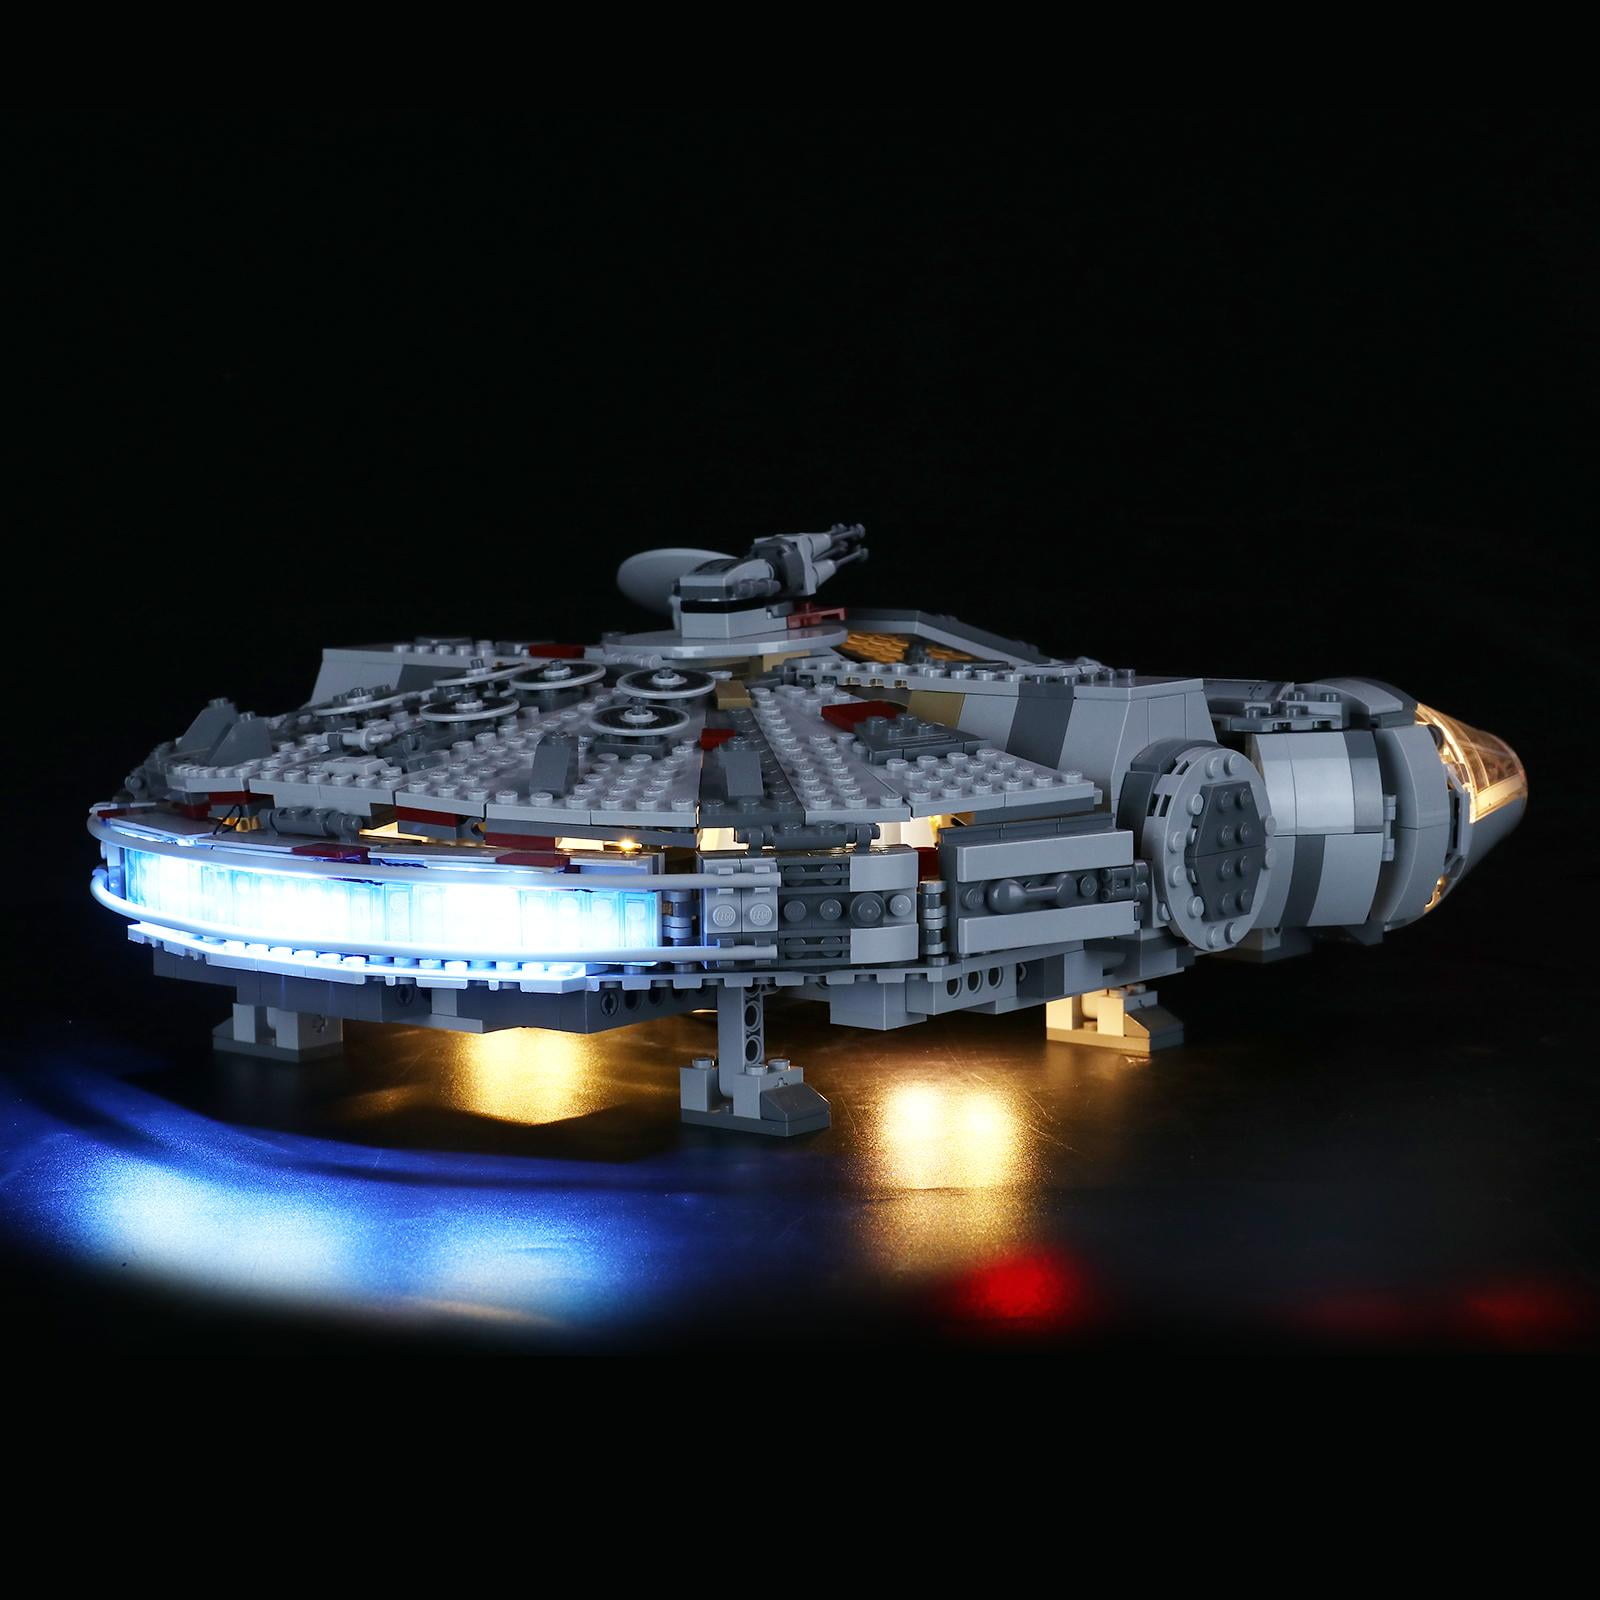 BRIKSMAX LED Lighting Kit for 75257 Millennium Falcon - Not Include The Lego Building Blocks Model Set